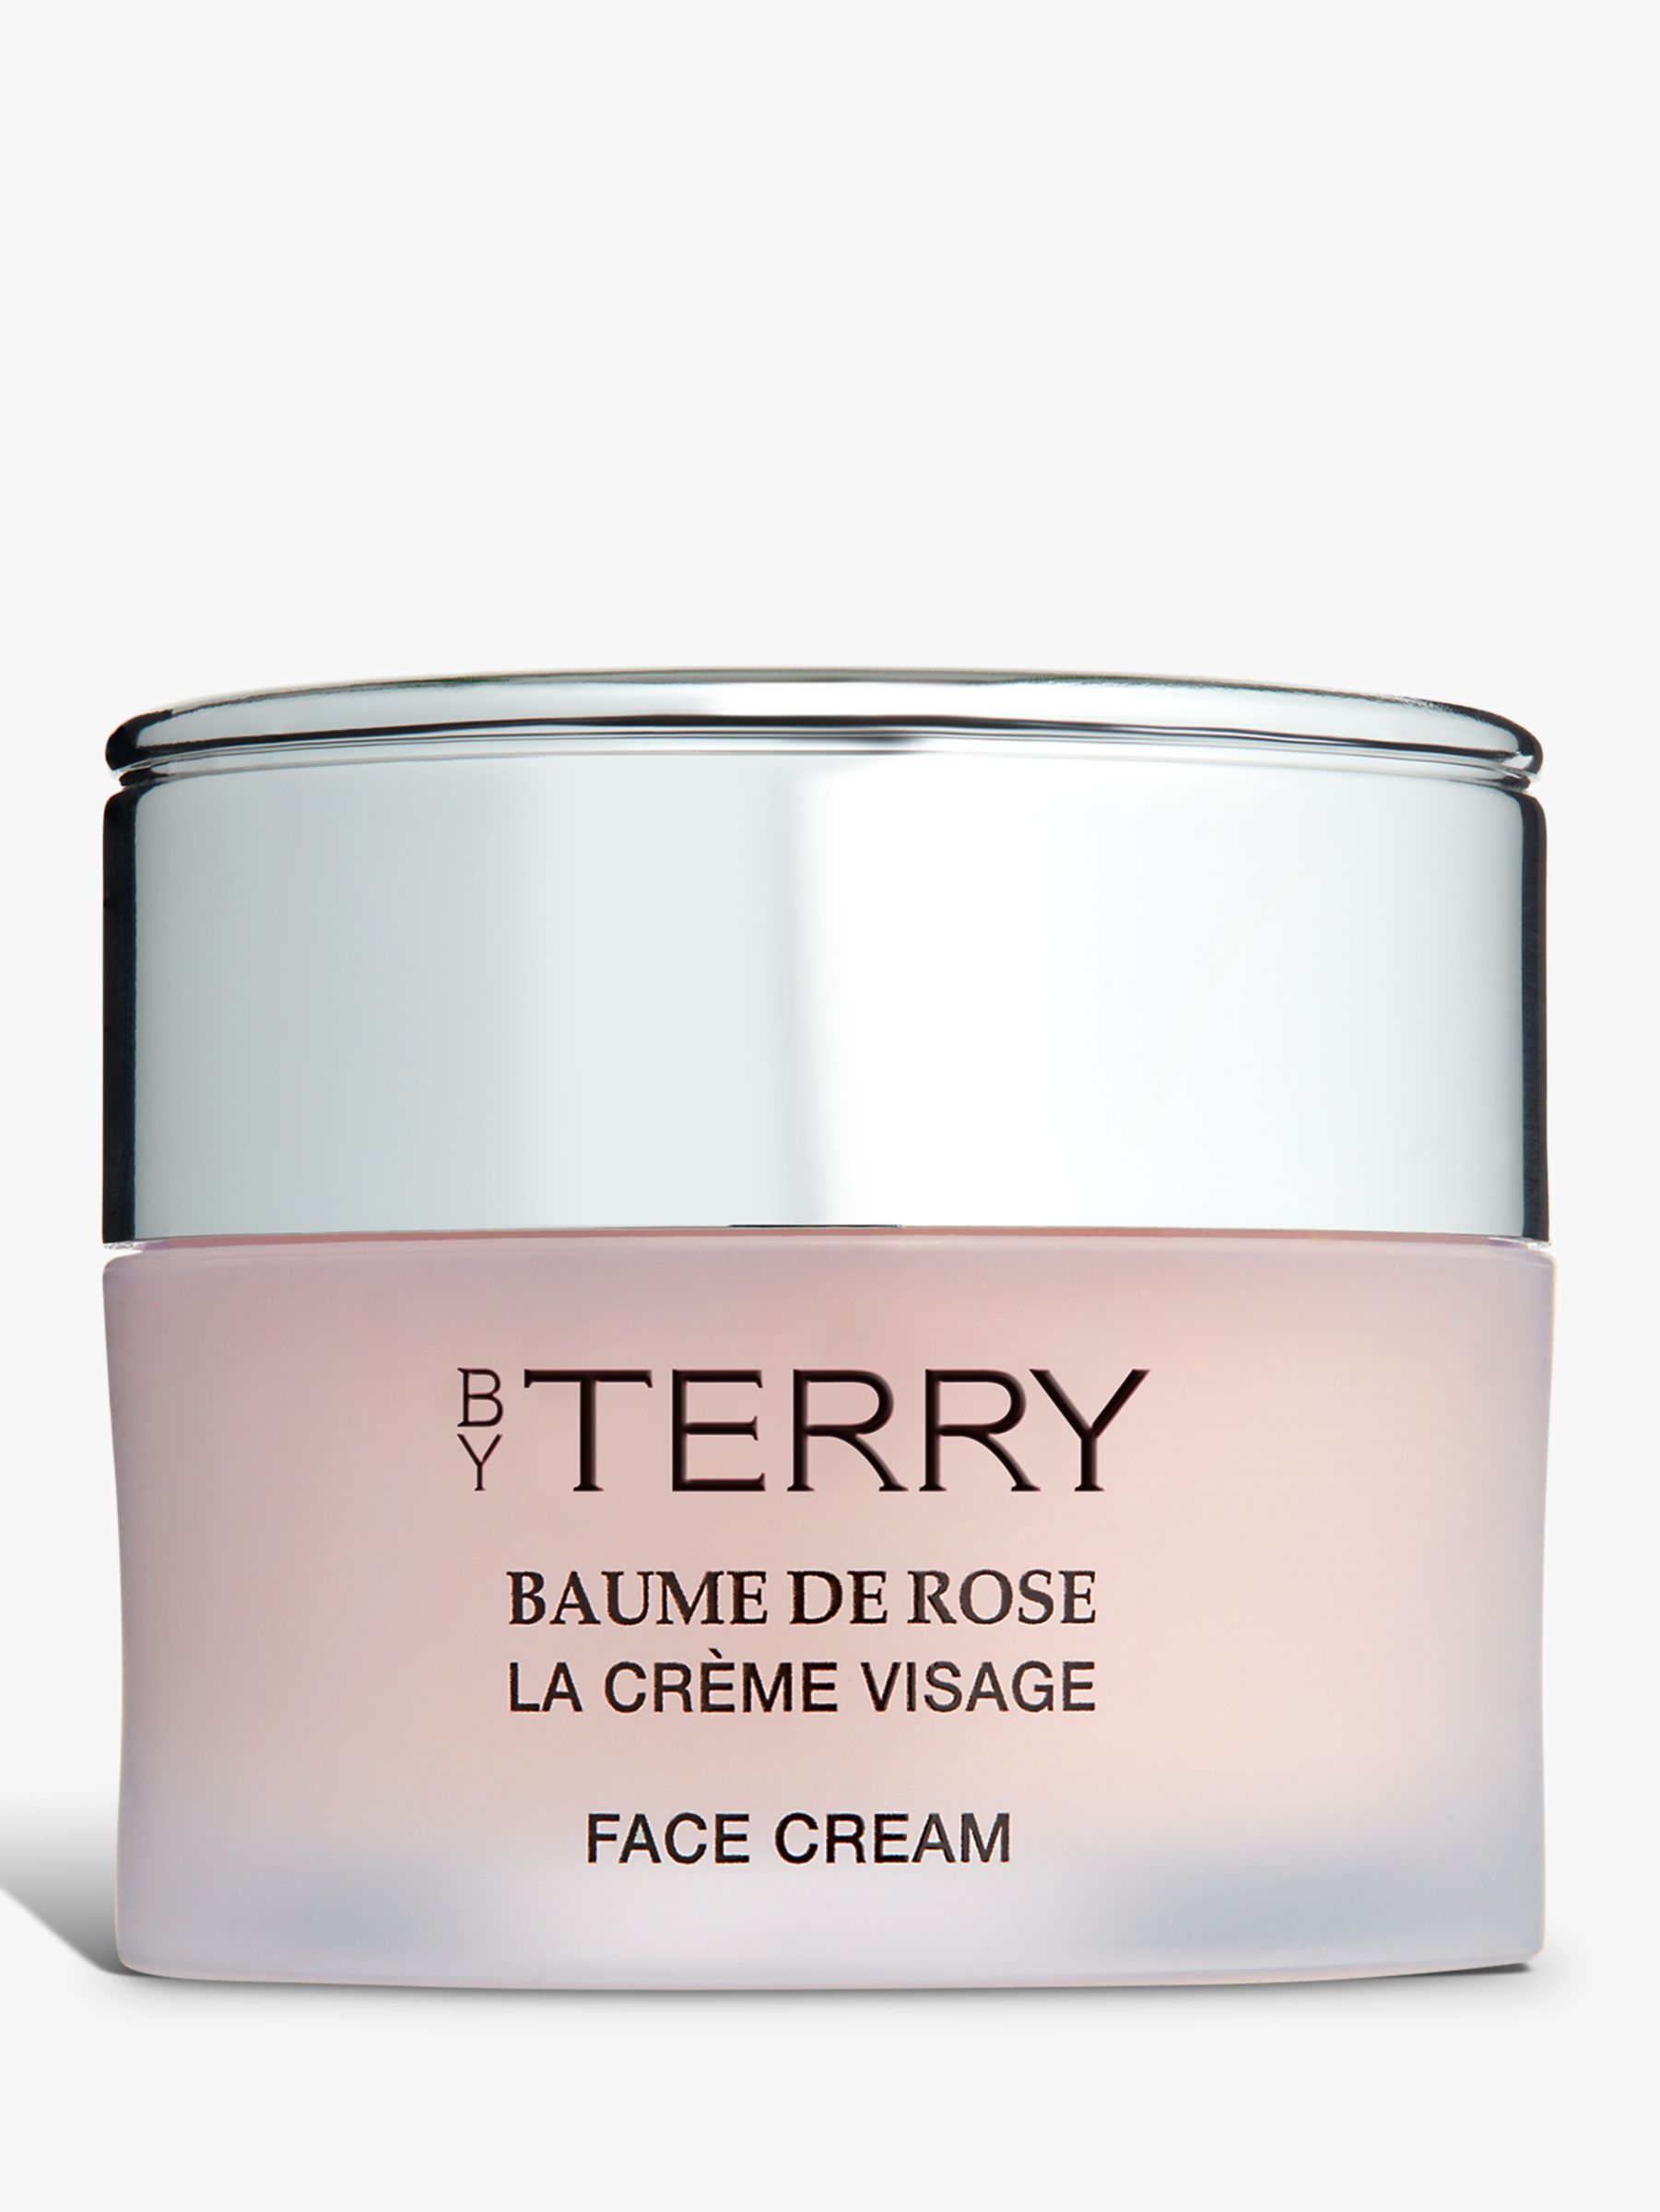 BY TERRY Baume de Rose Face Cream, 50ml 1